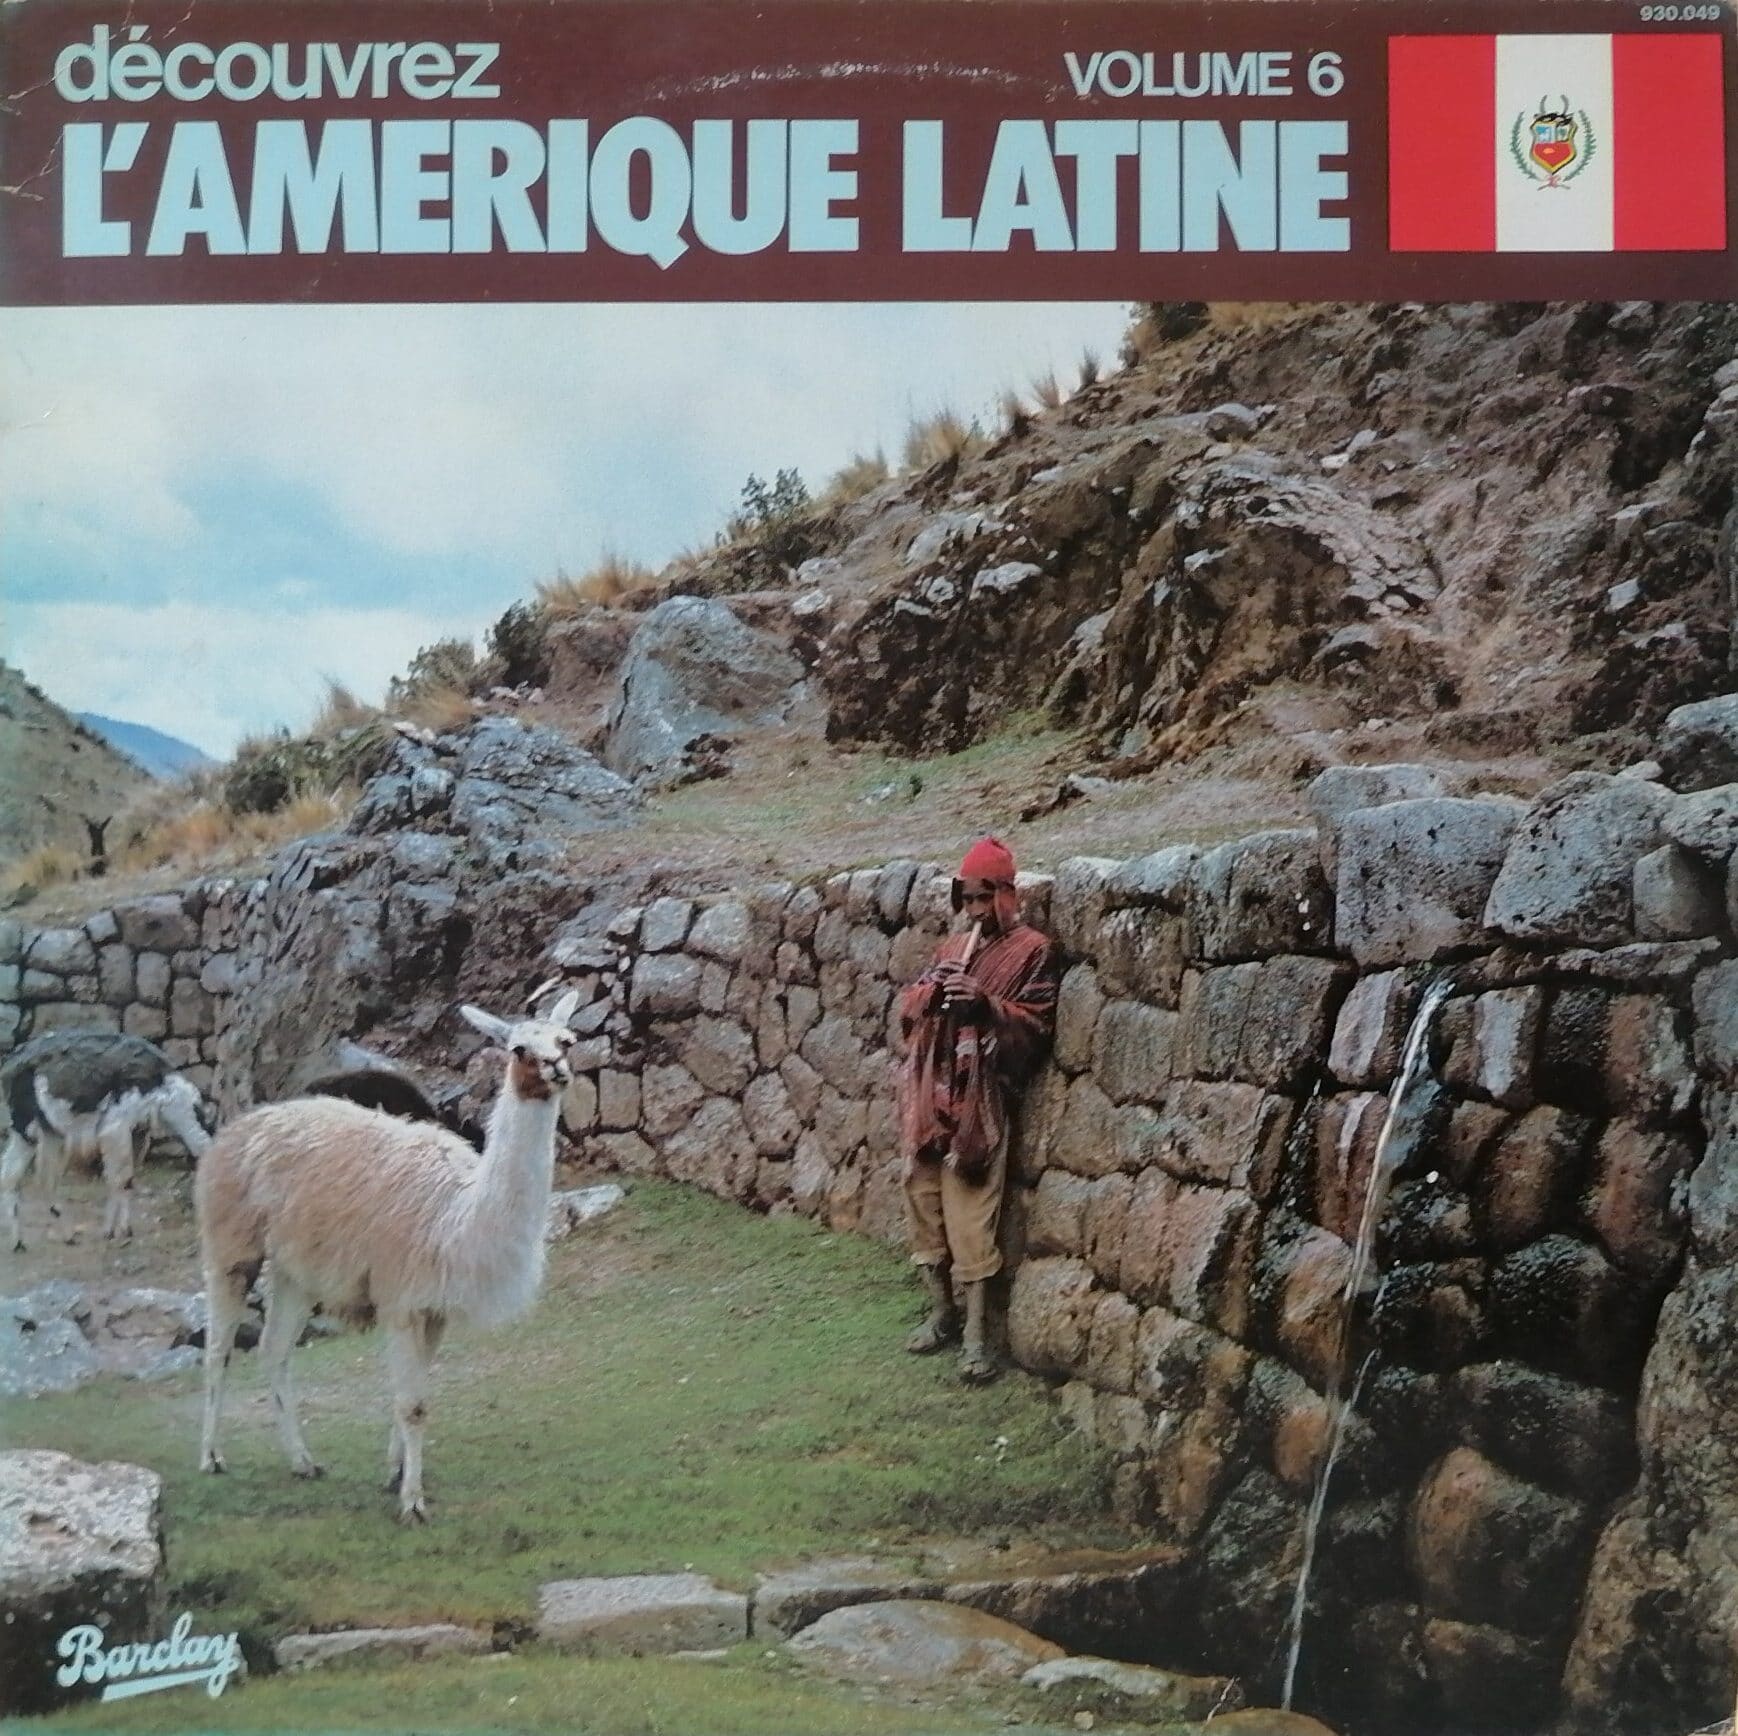 Gramofonska ploča Découvrez L'amerique Latine Volume 6 Alejandro Vivanco / Darío Garzón / Alfredo Mena... 930 049